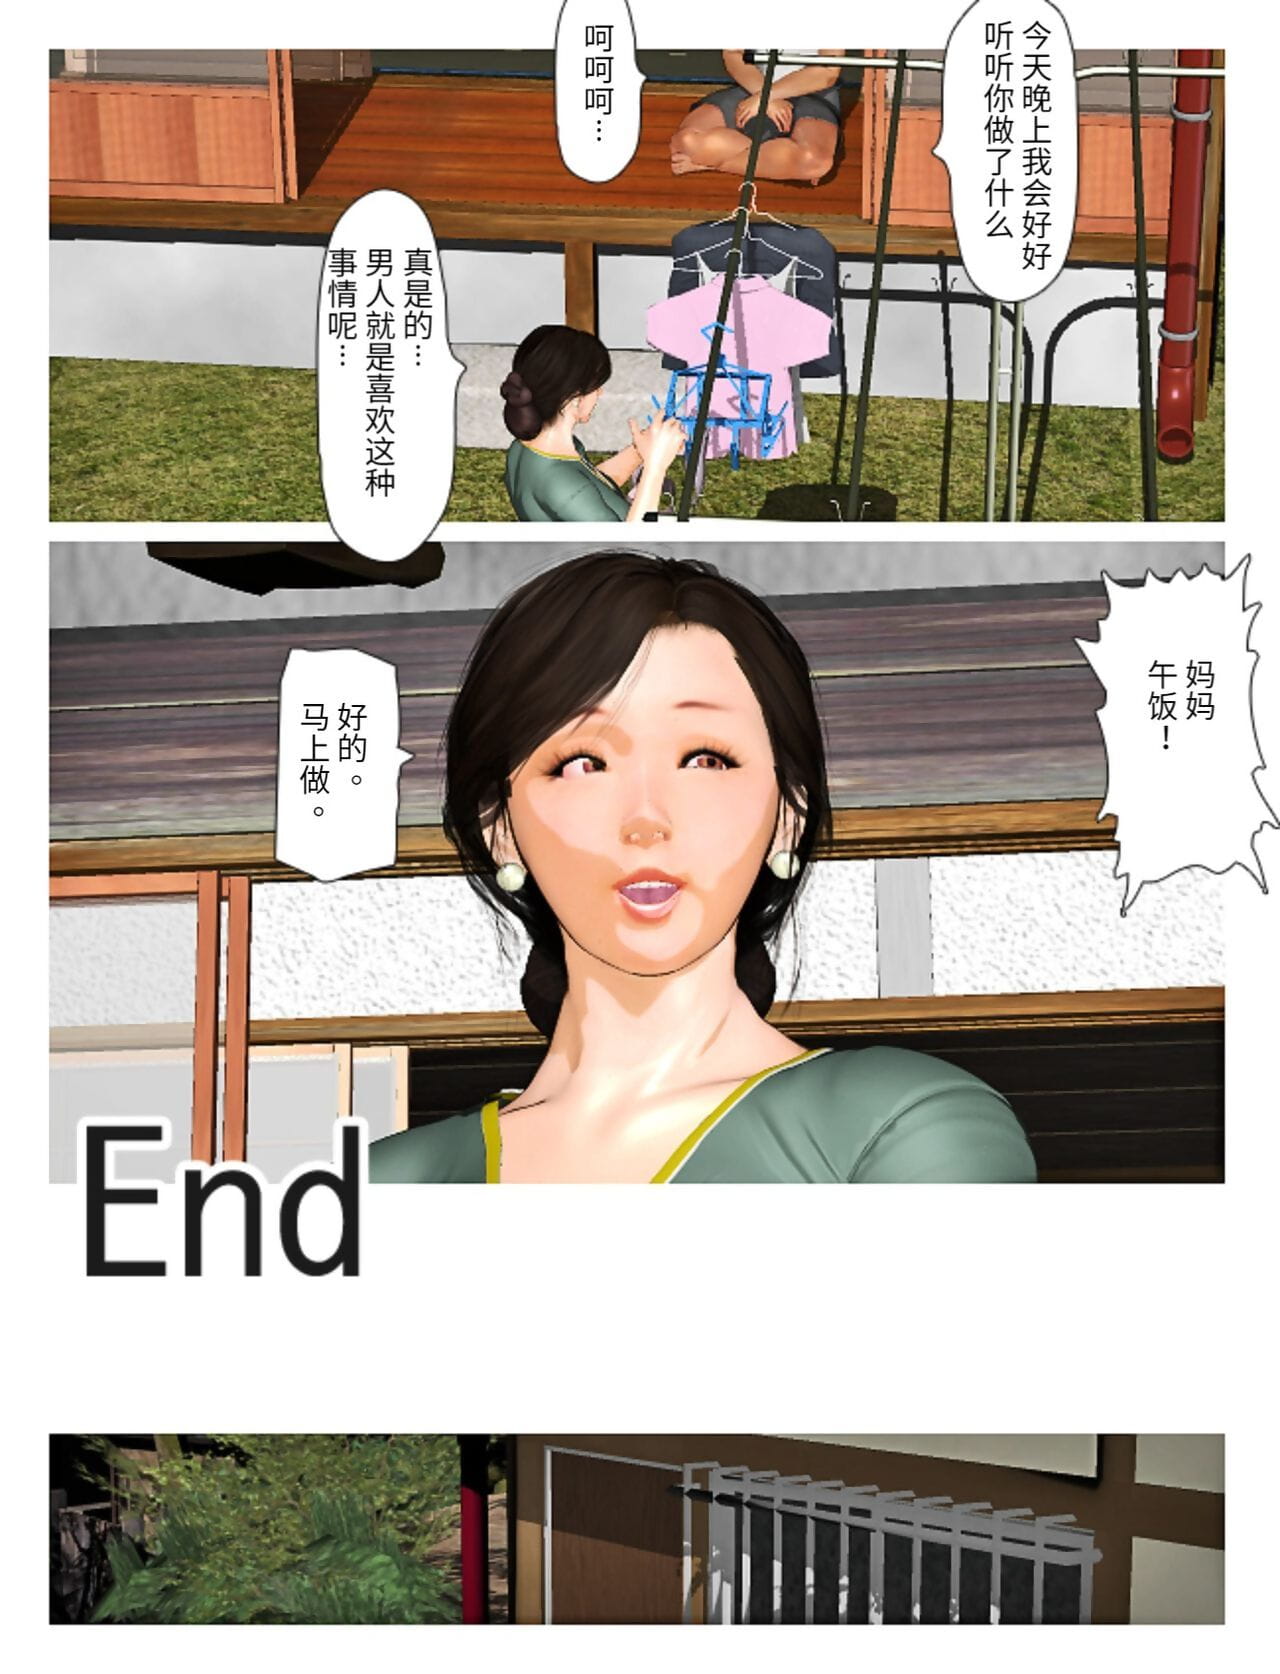 Kyou no Misako-san 2019:4 - part 5 page 1